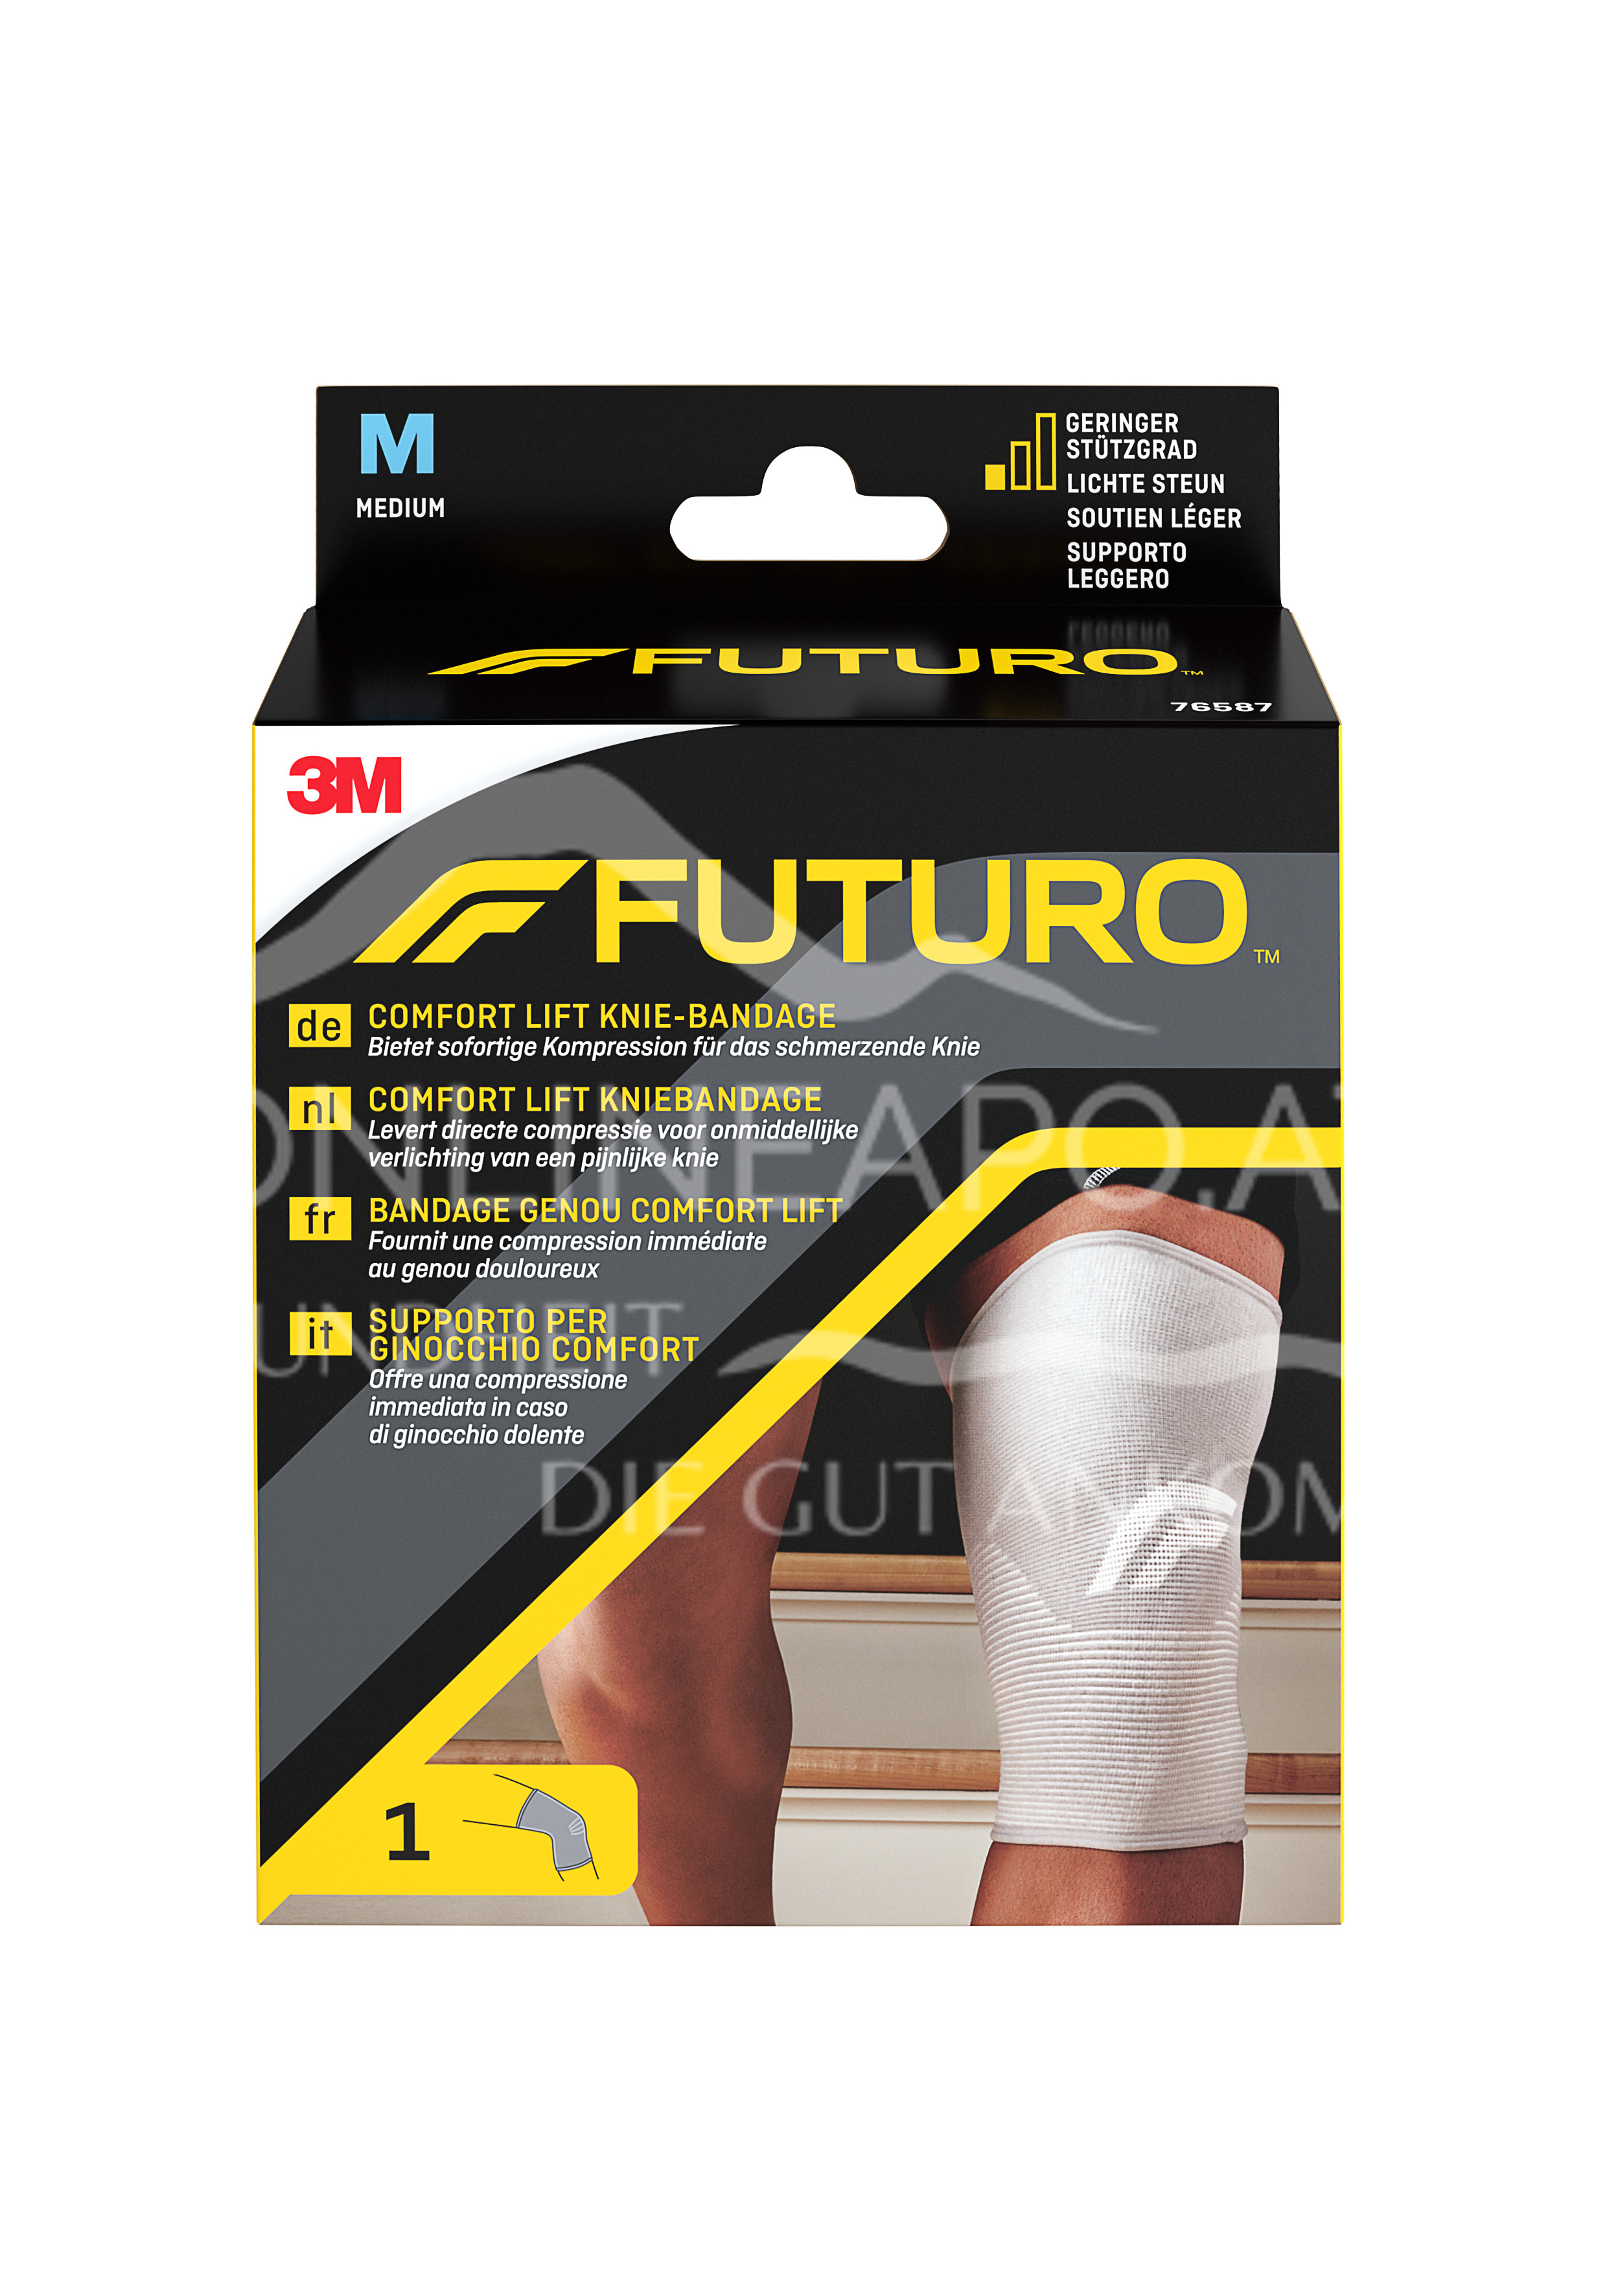 3M FUTURO™ Comfort Lift Knie-Bandage 76587, Größe M